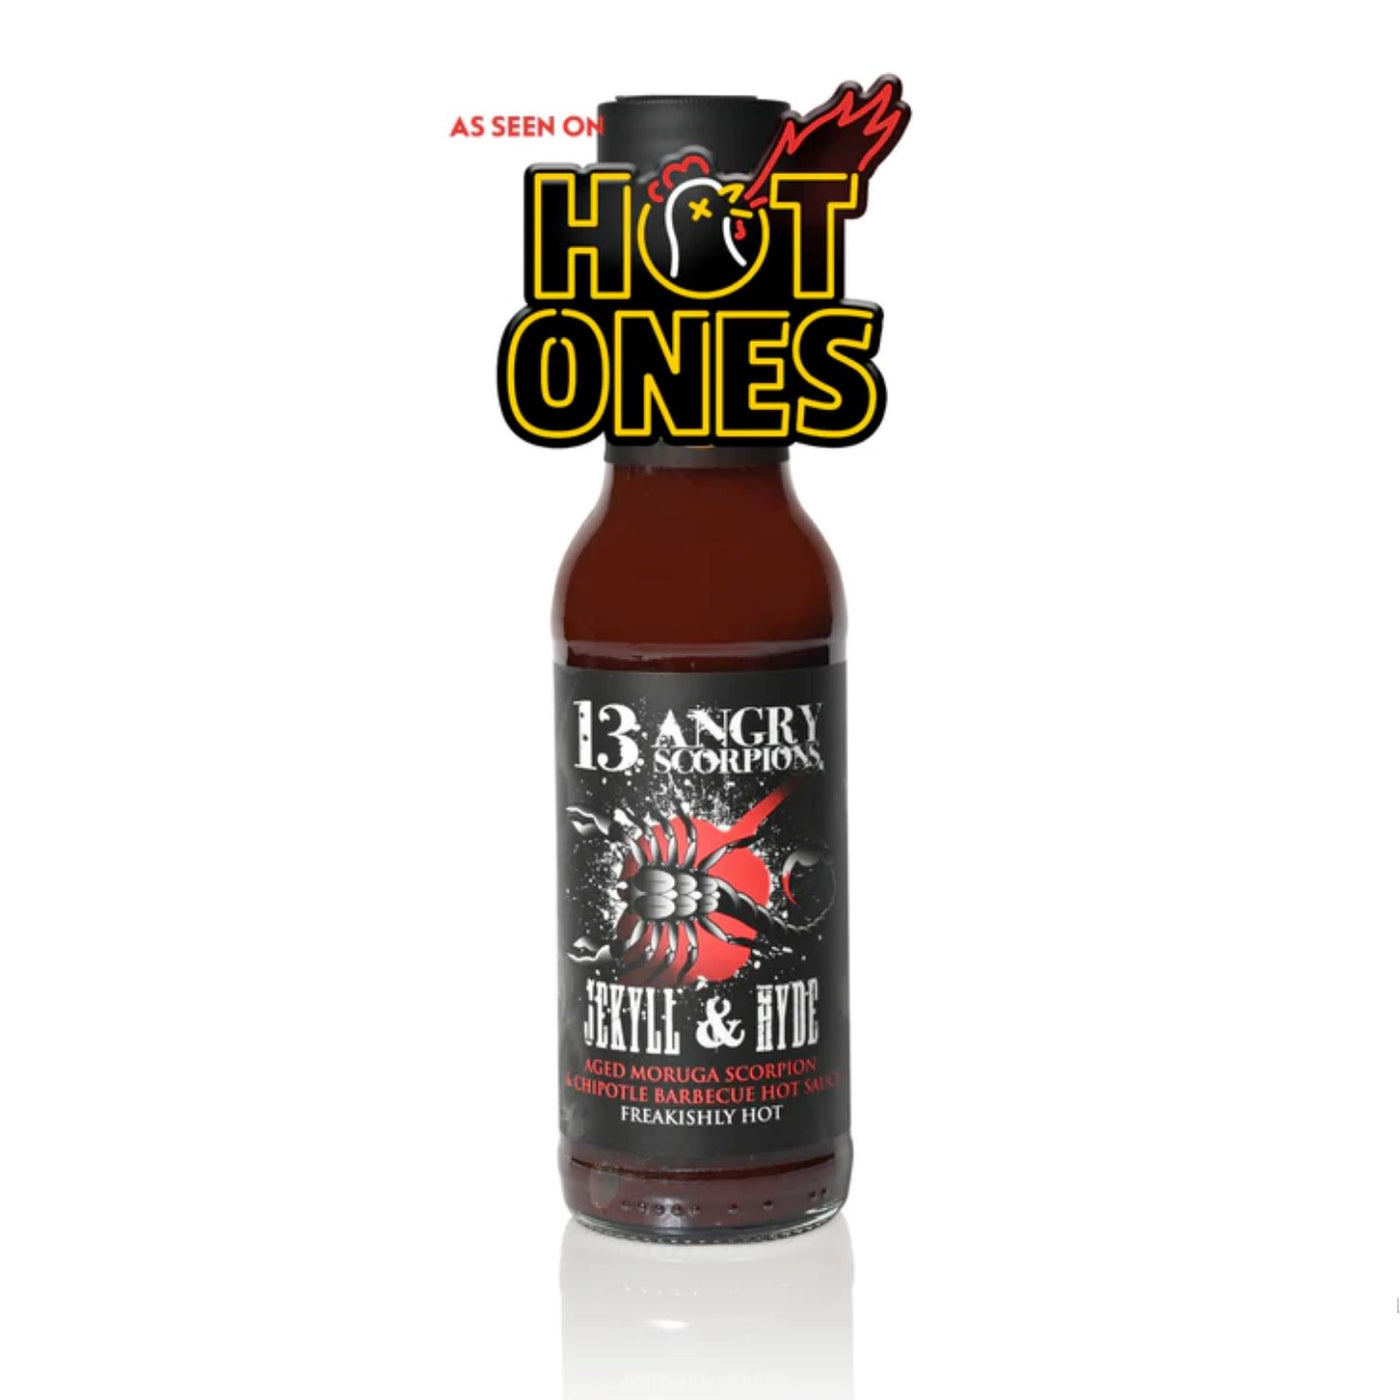 13 Angry Scorpions Jekyll & Hyde Hot Sauce 150ml